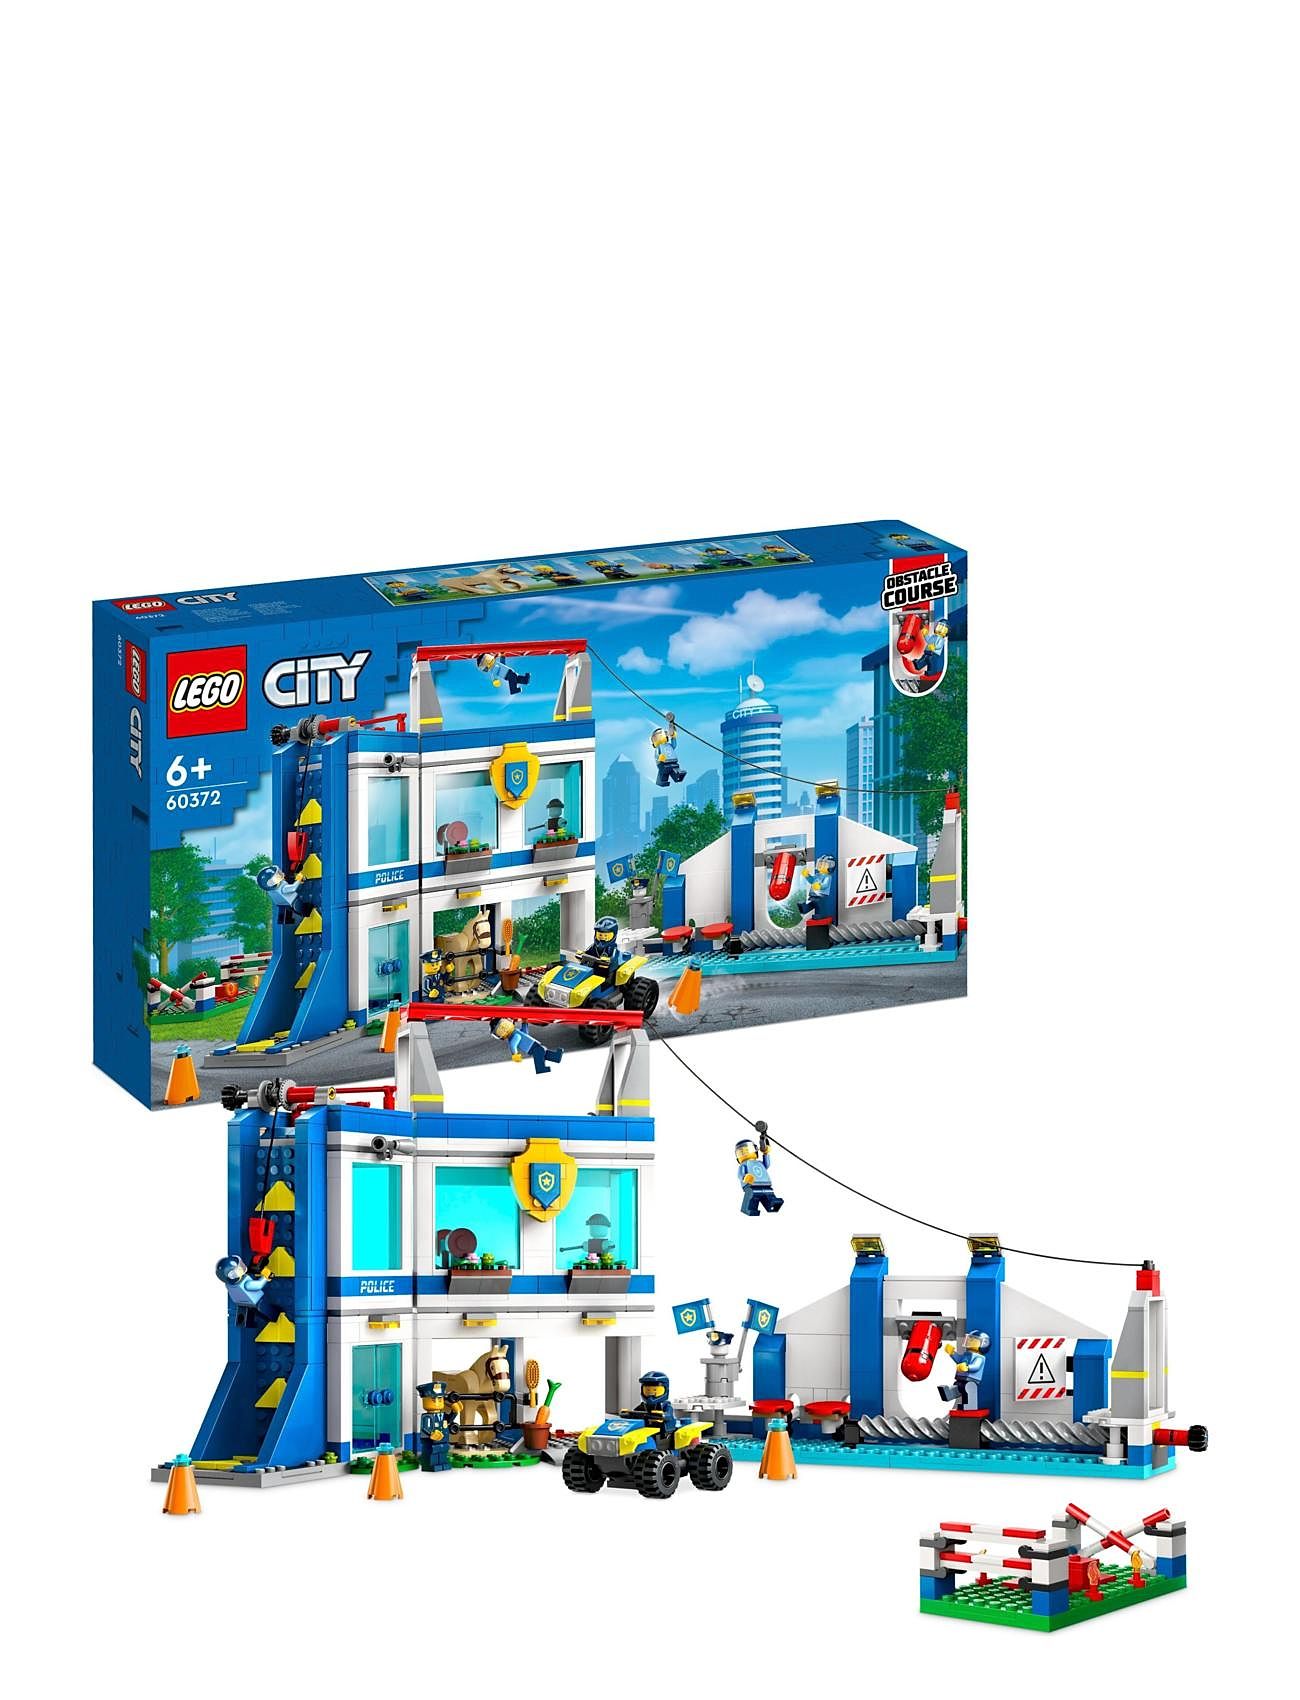 Police Training Academy Obstacle Course Set Toys Lego Toys Lego city Multi/patterned LEGO